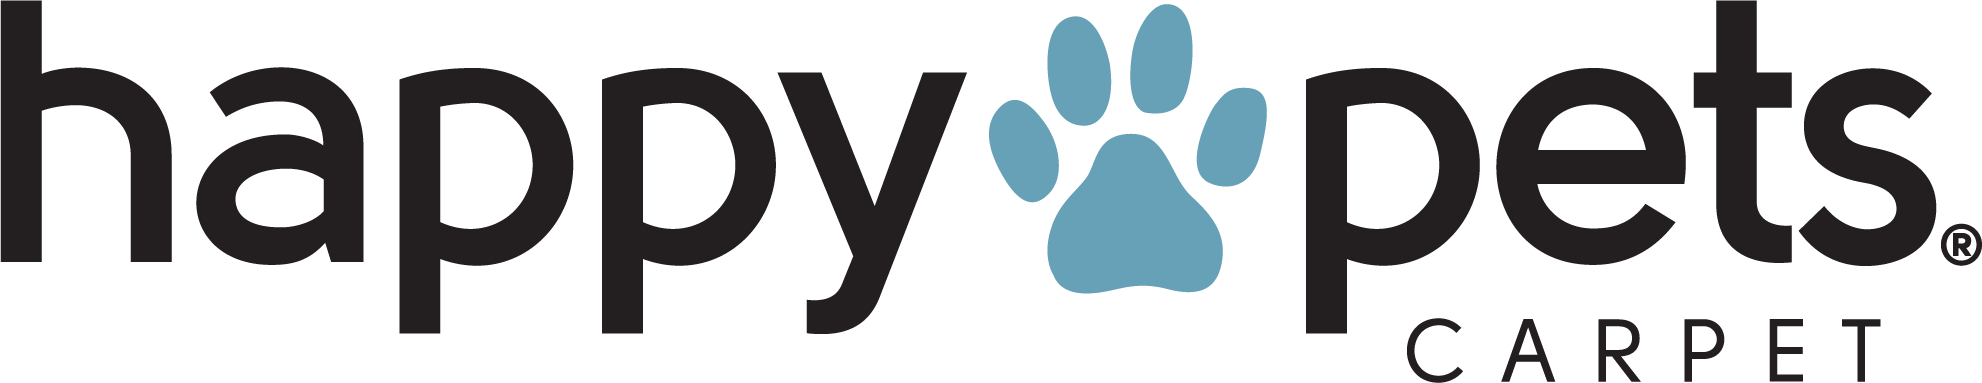 Pet Performance Happy Pets Logo | CarpetsPlus Of Wisconsin